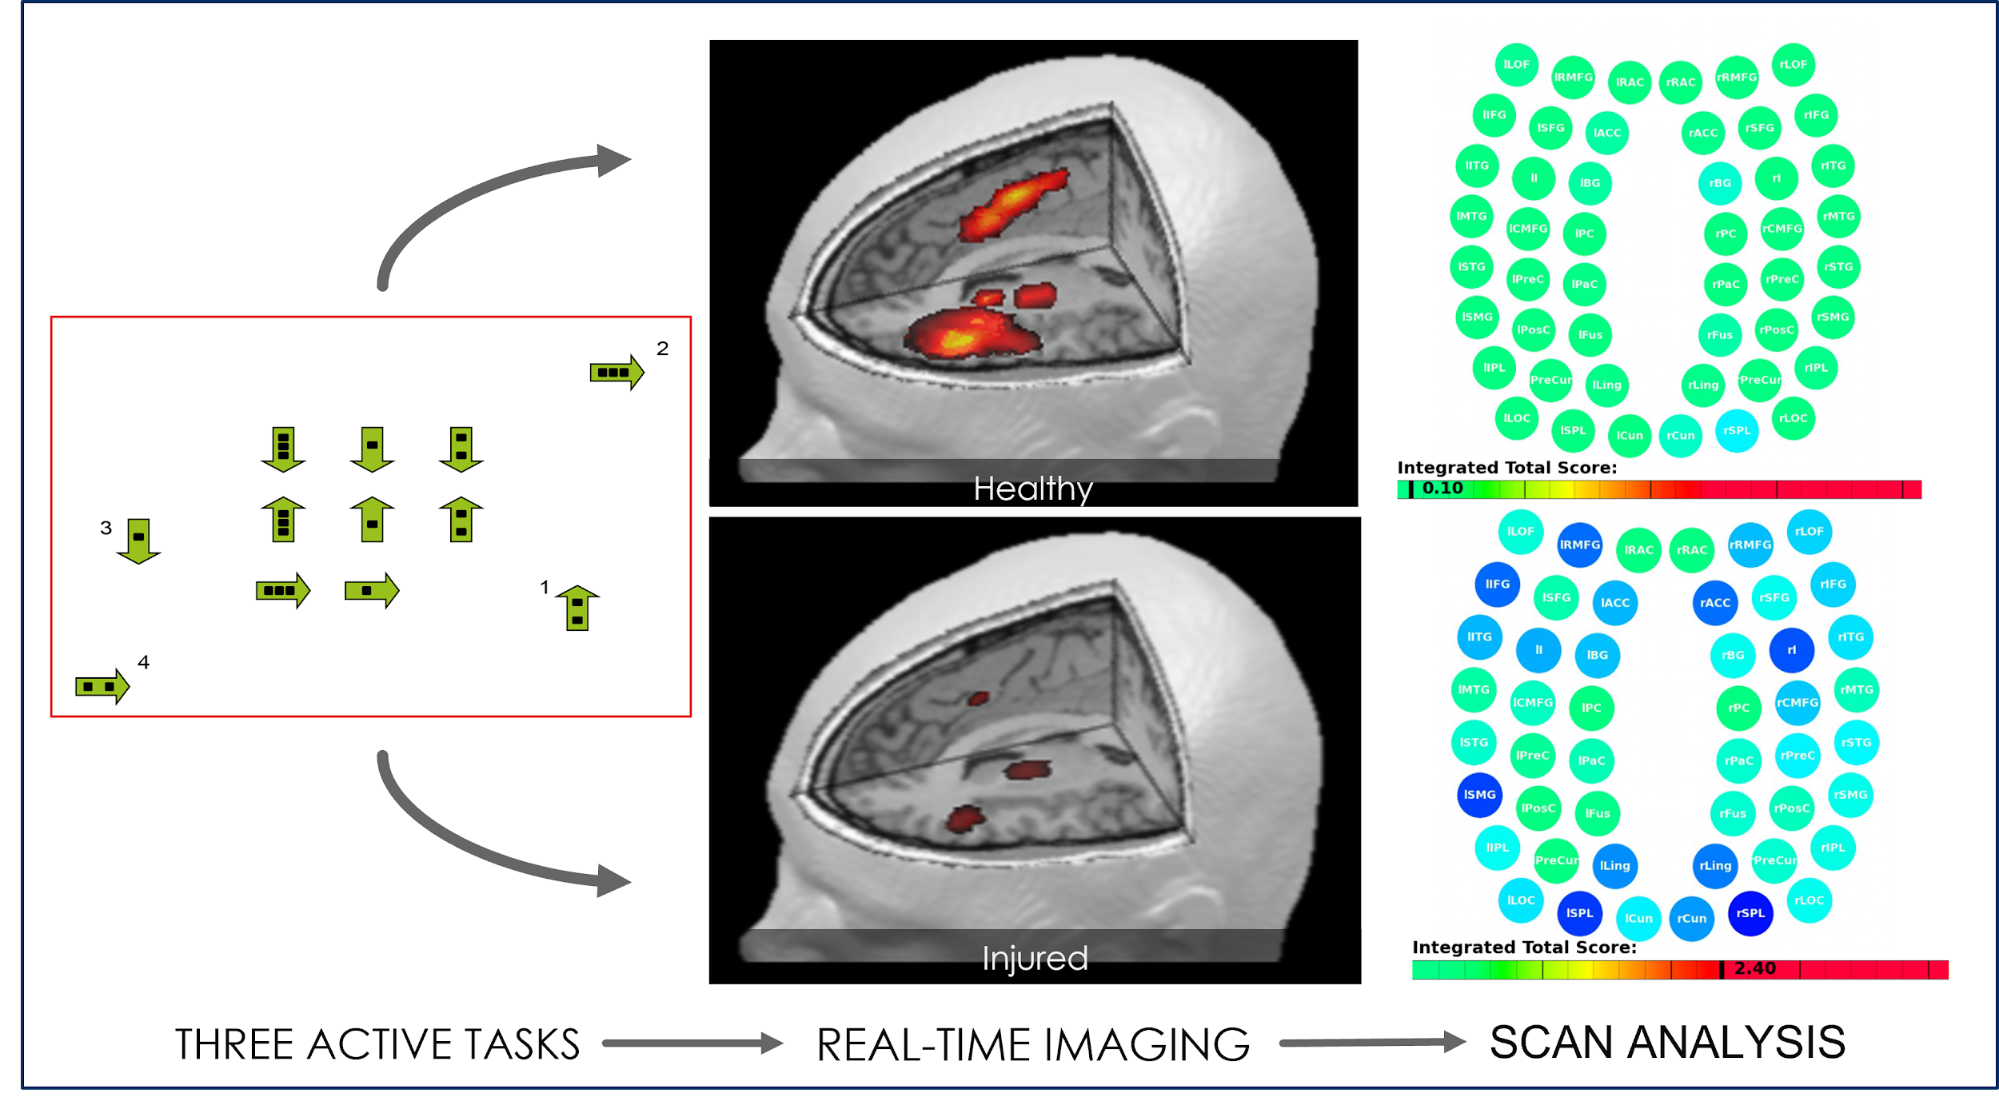 Three Active Tasks > Real-Time Imaging > Scan Analysis